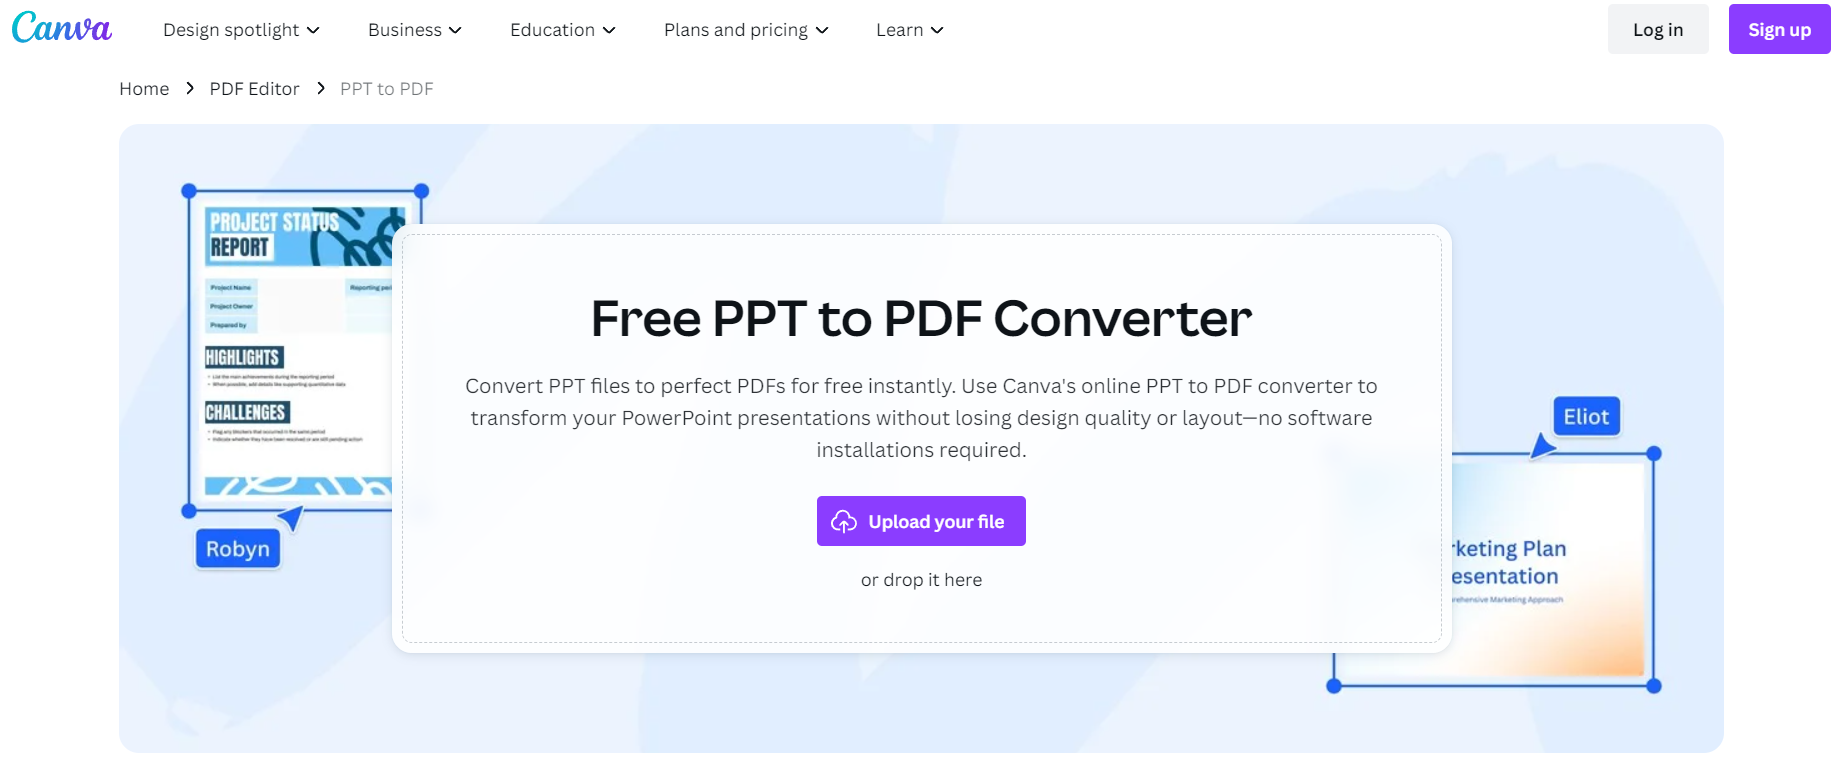 Canva Free PPT to PDF Converter